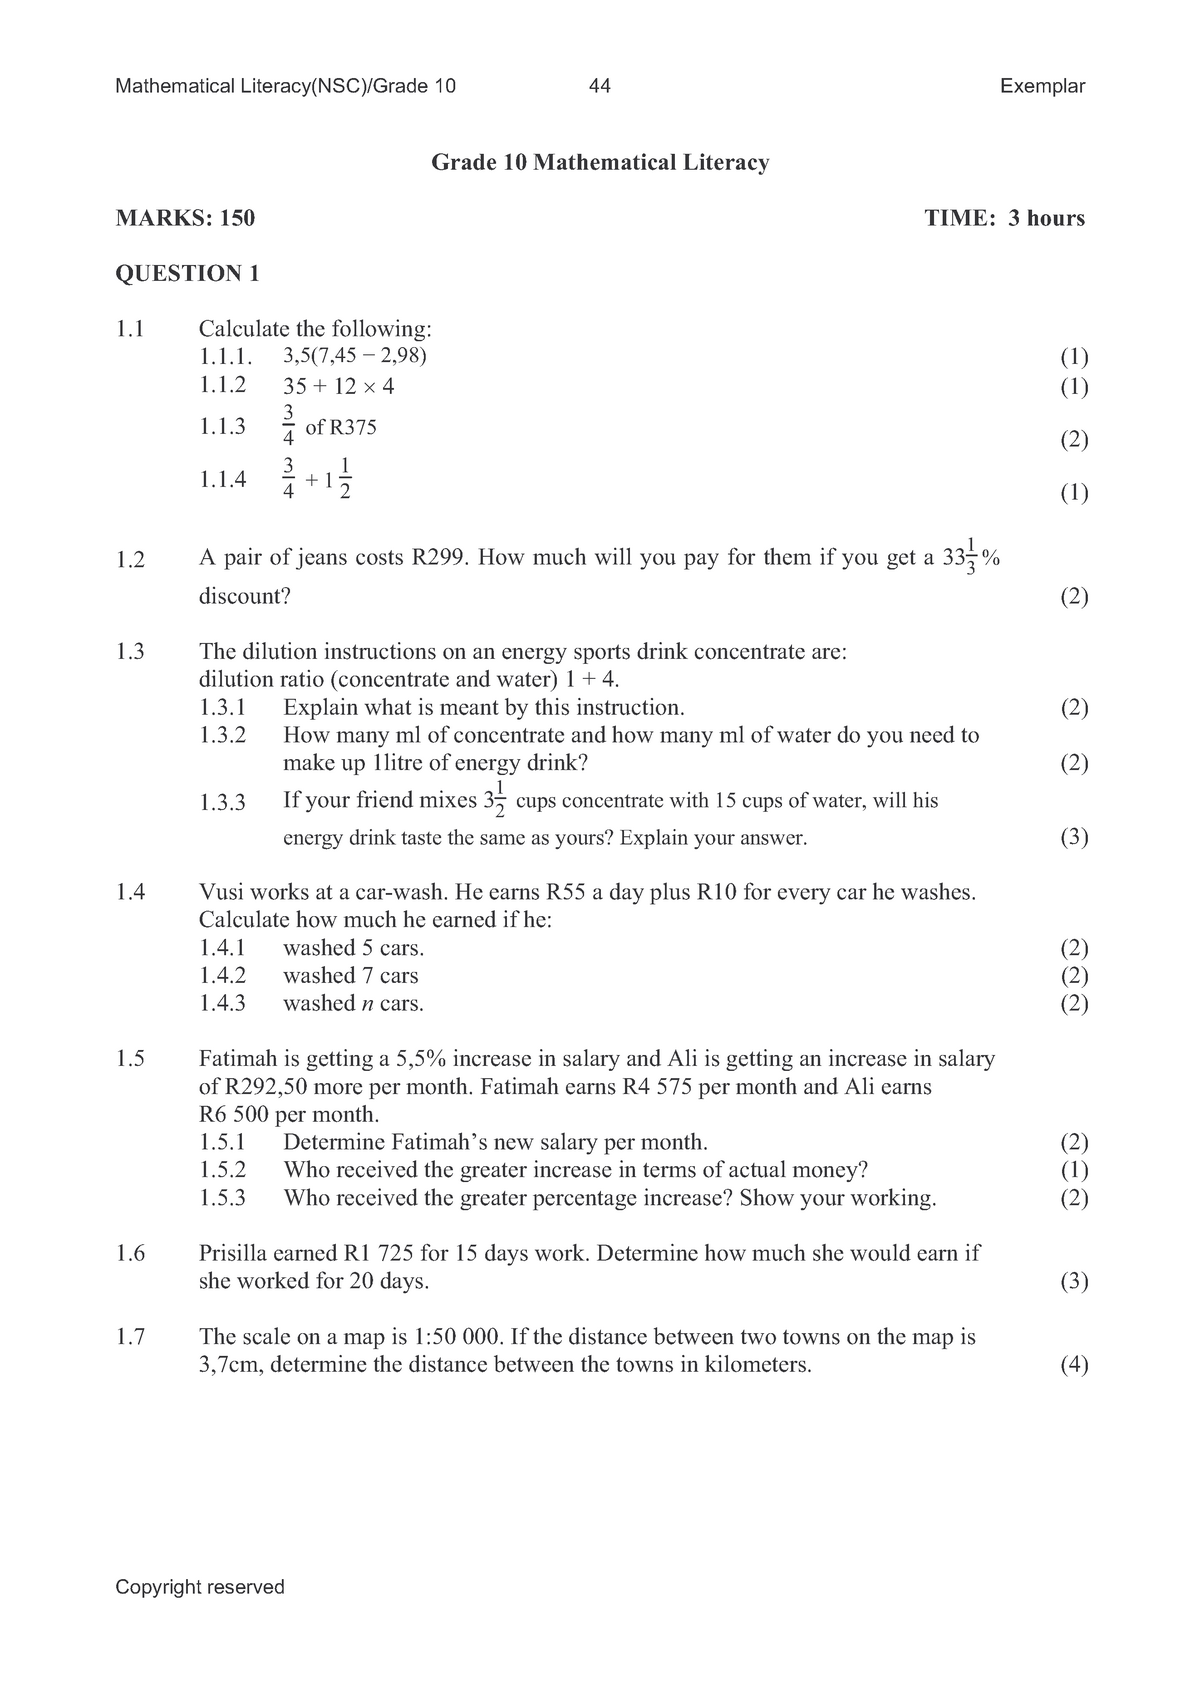 maths-lit-10-grade-10-mathematical-literacy-marks-150-time-3-hours